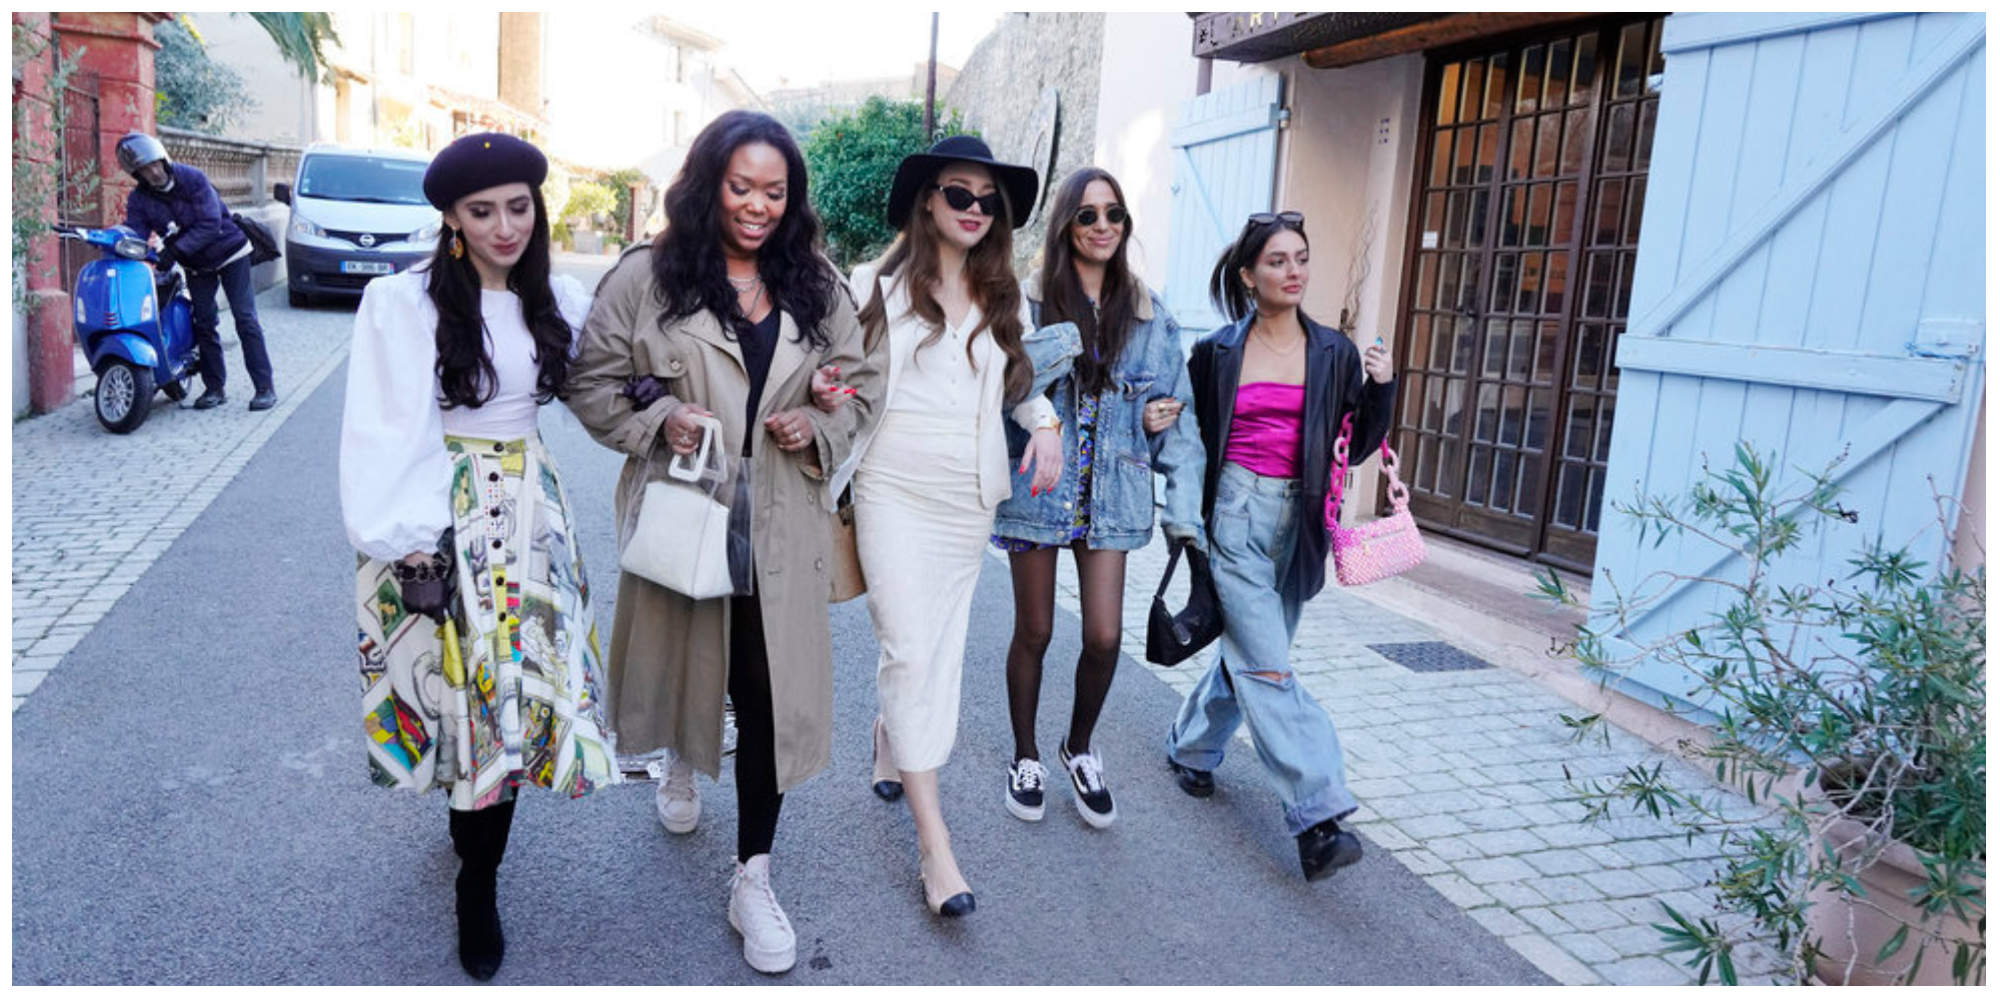 Anya Firestone, Adja Toure, Emily Gorelik, Margaux Lignel, Victoria Zito from 'Real Girlfriends in Paris' walk down the street arm in arm